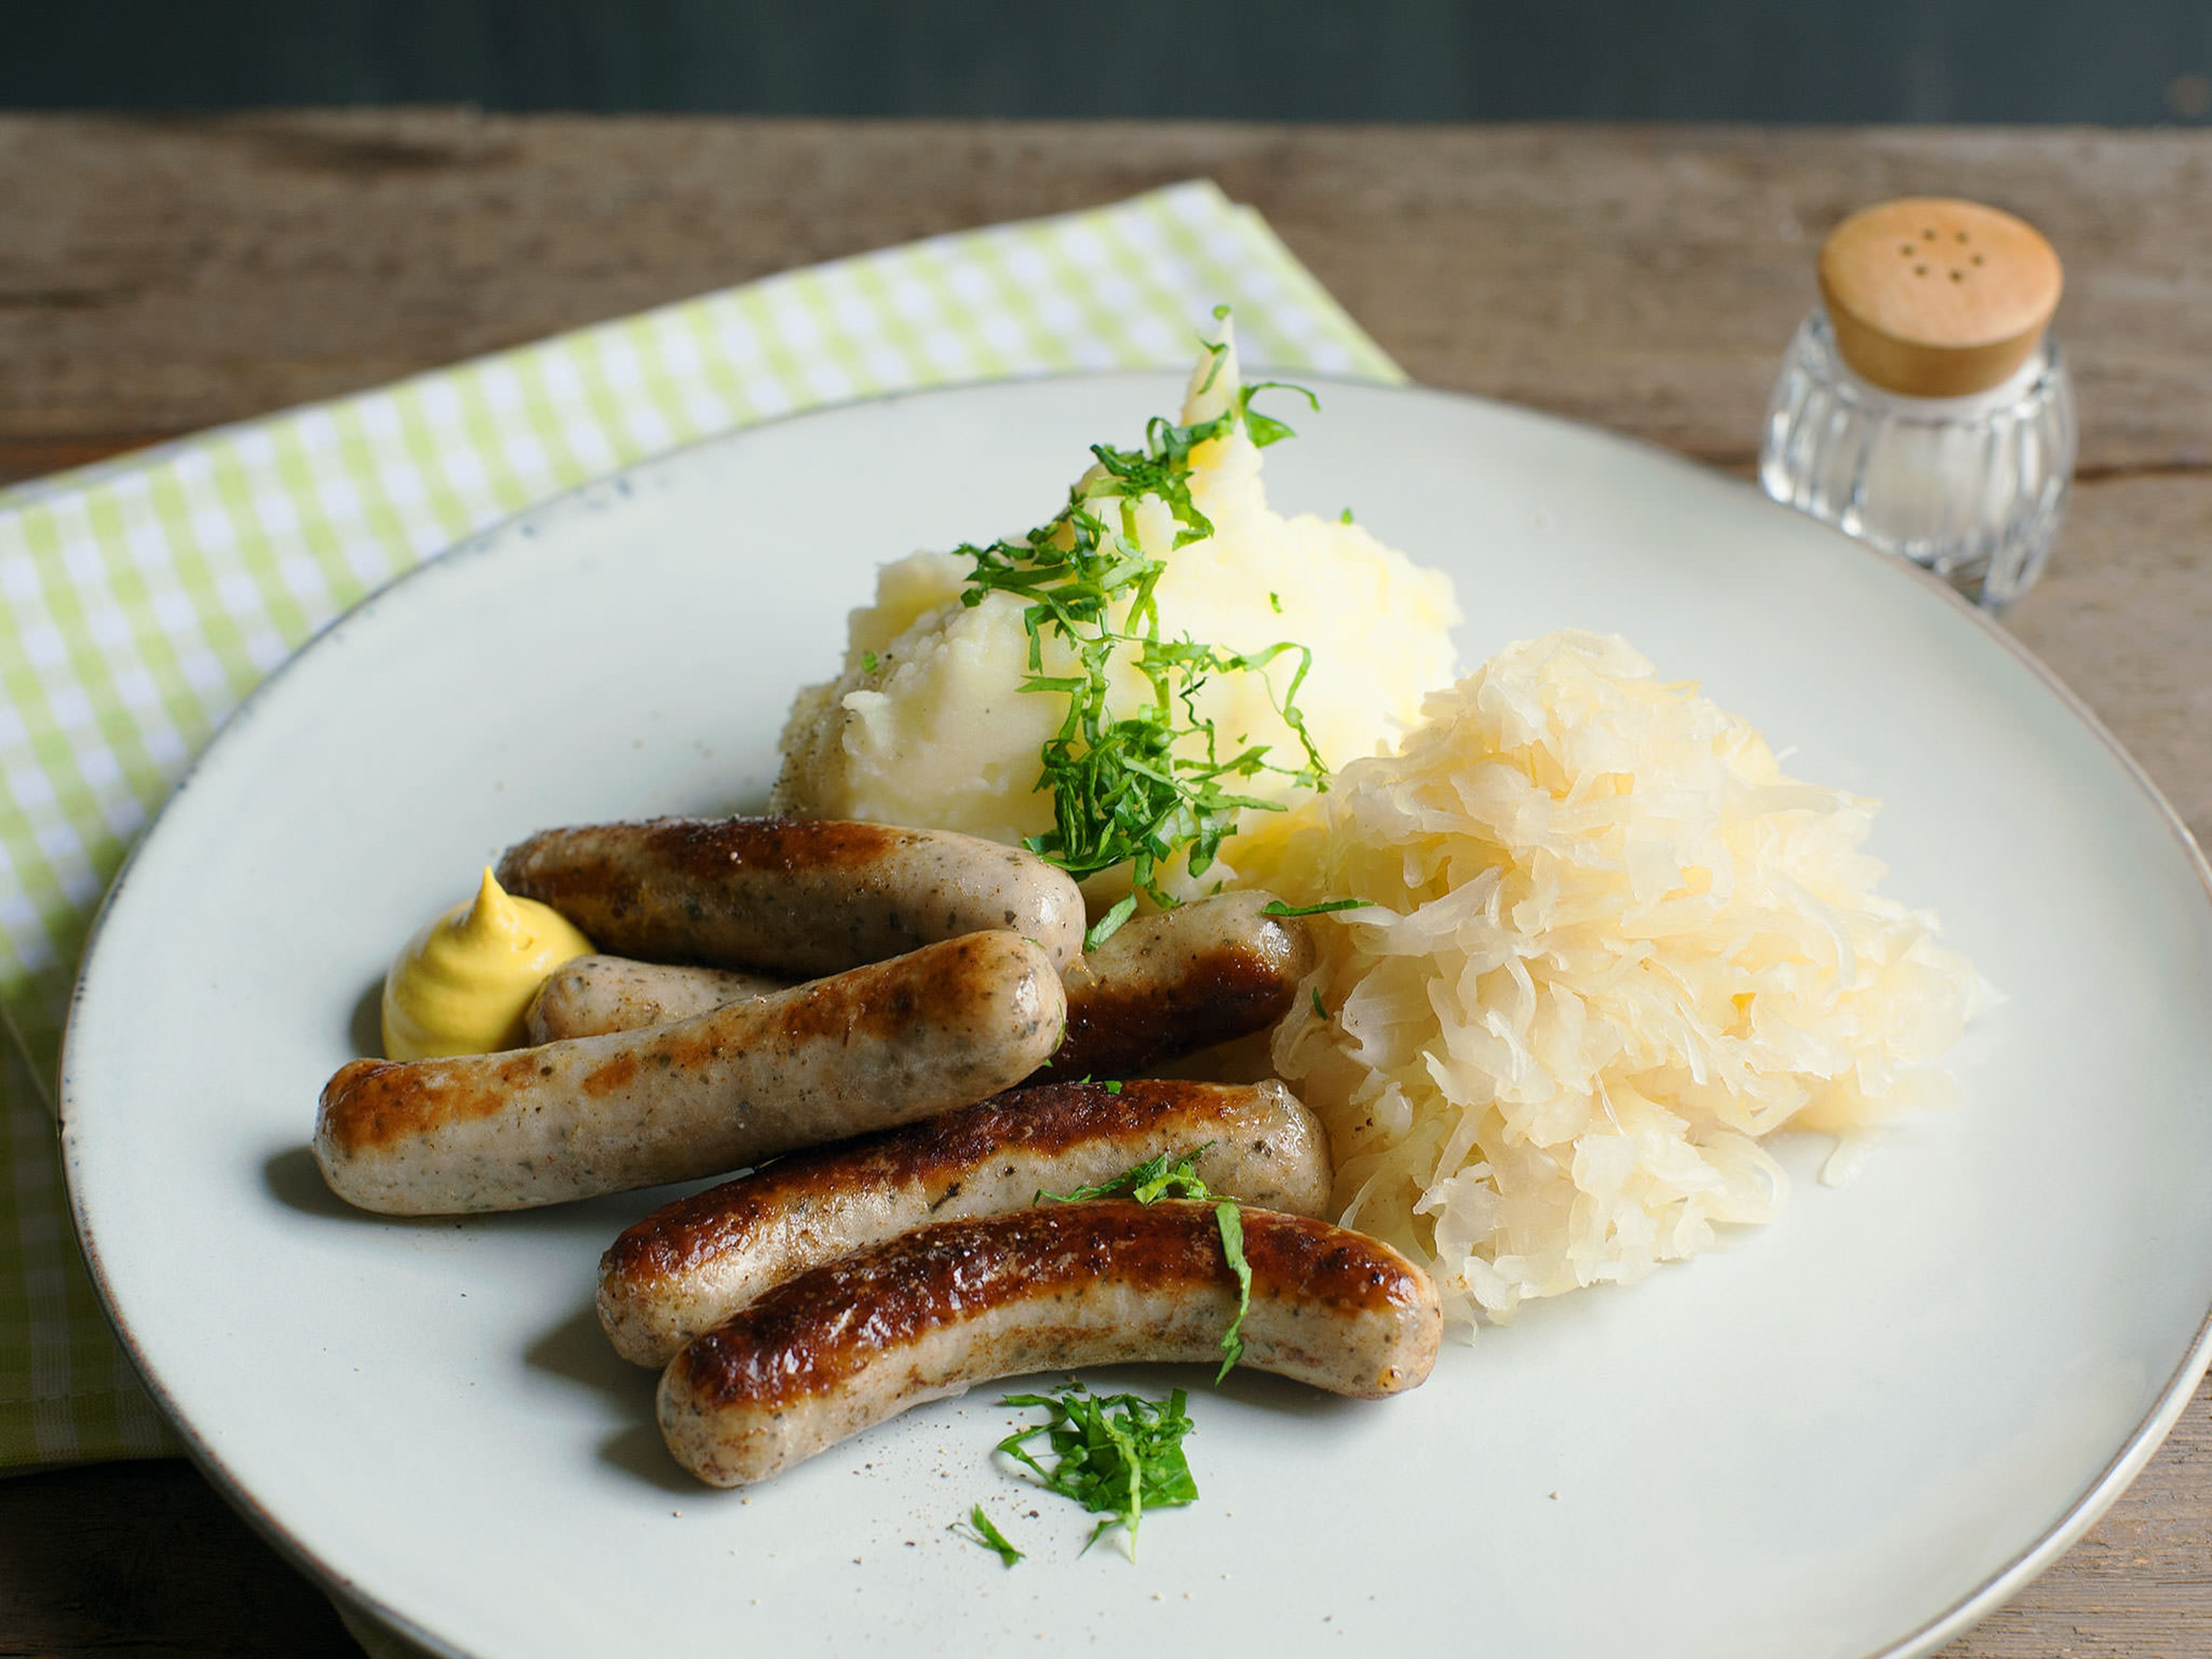 Nürnberger bratwursts with sauerkraut and mashed potatoes